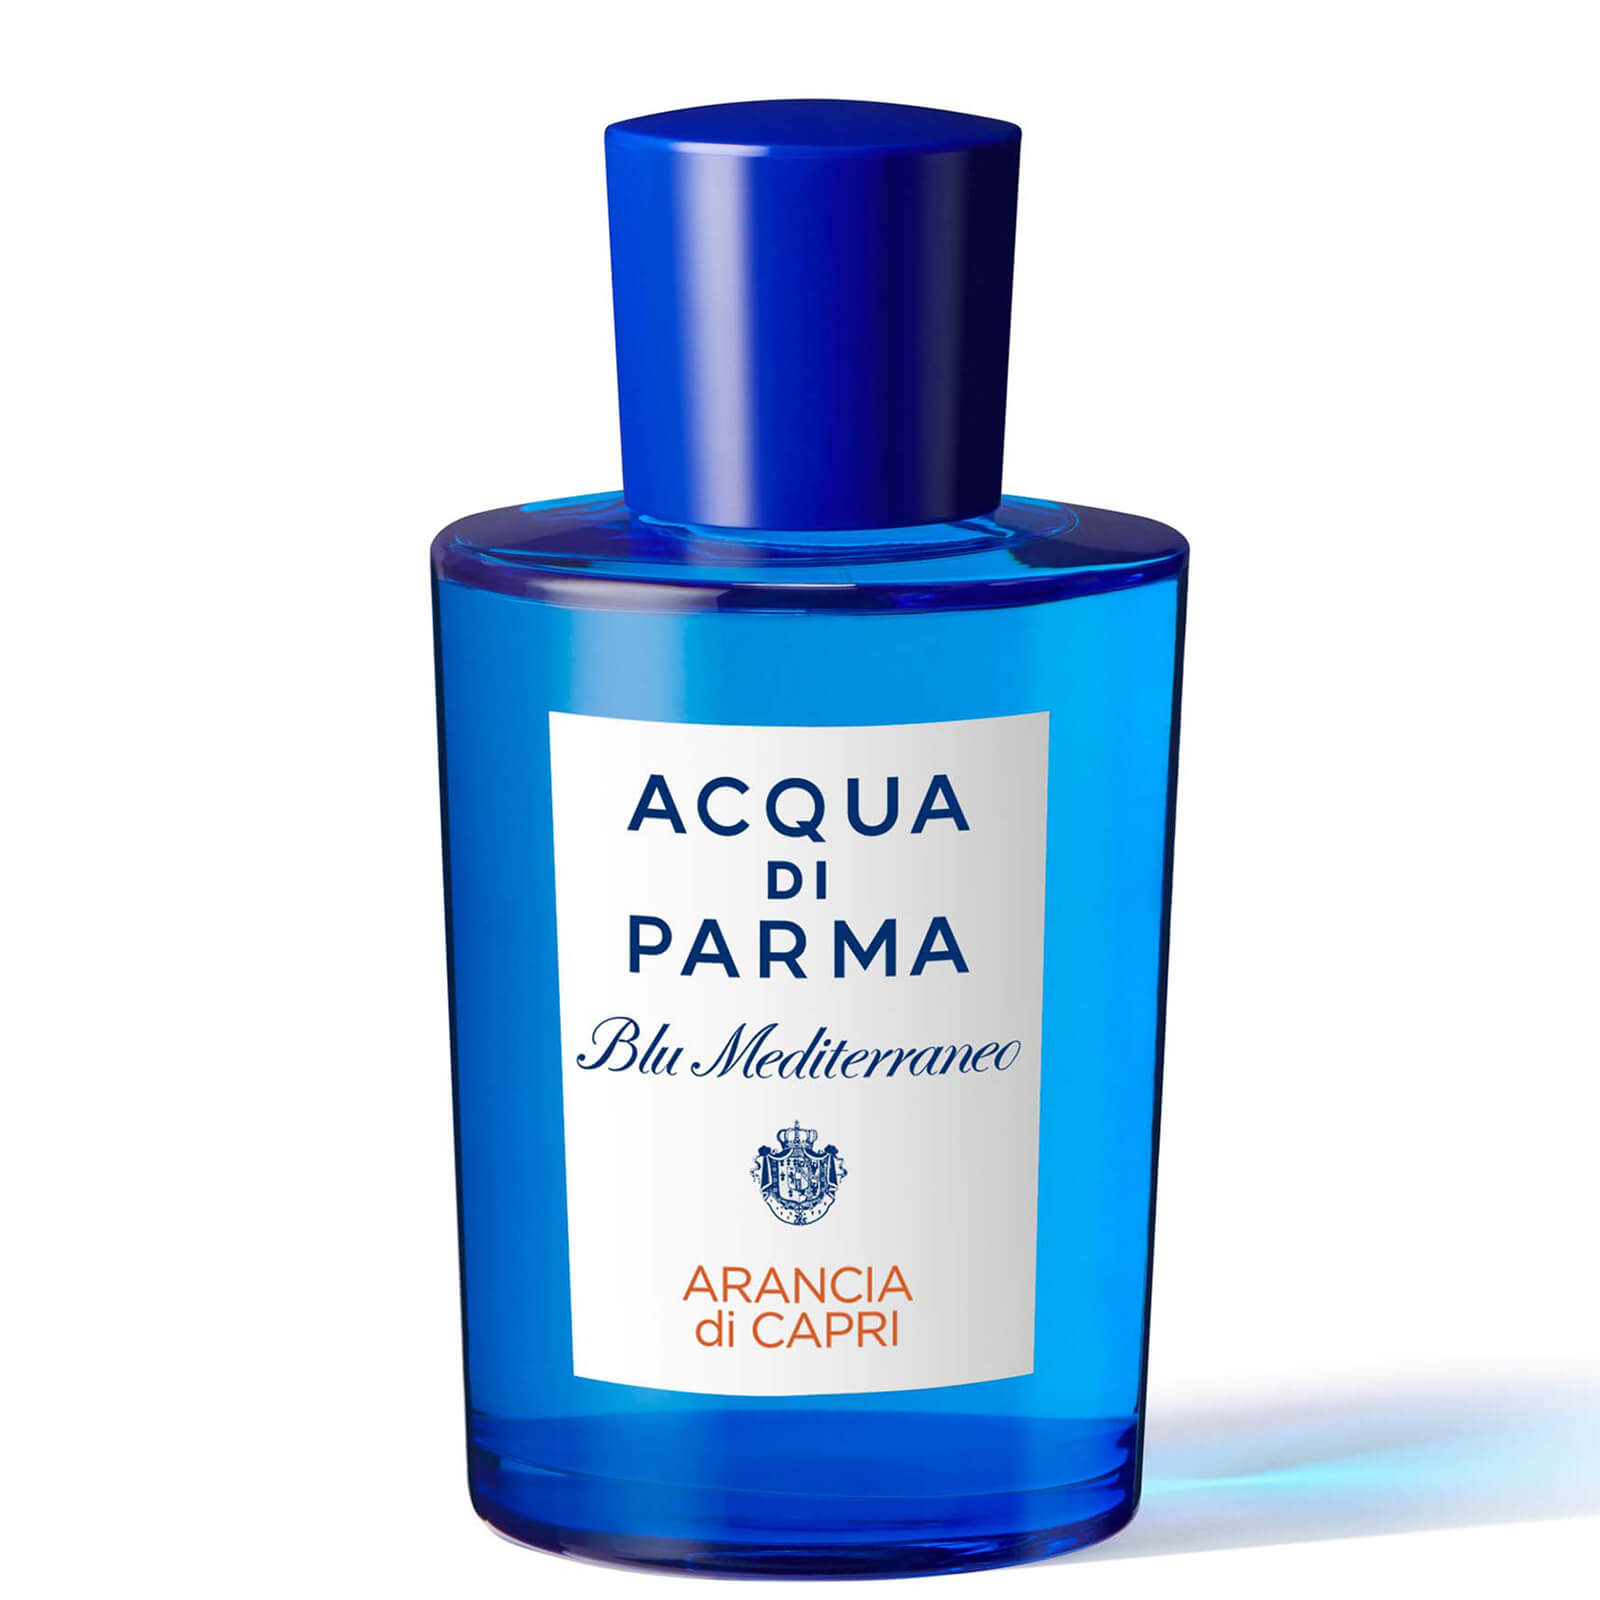 Photos - Women's Fragrance Acqua di Parma Blu Mediterraneo Arancia di Capri Eau de Toilette 150ml 